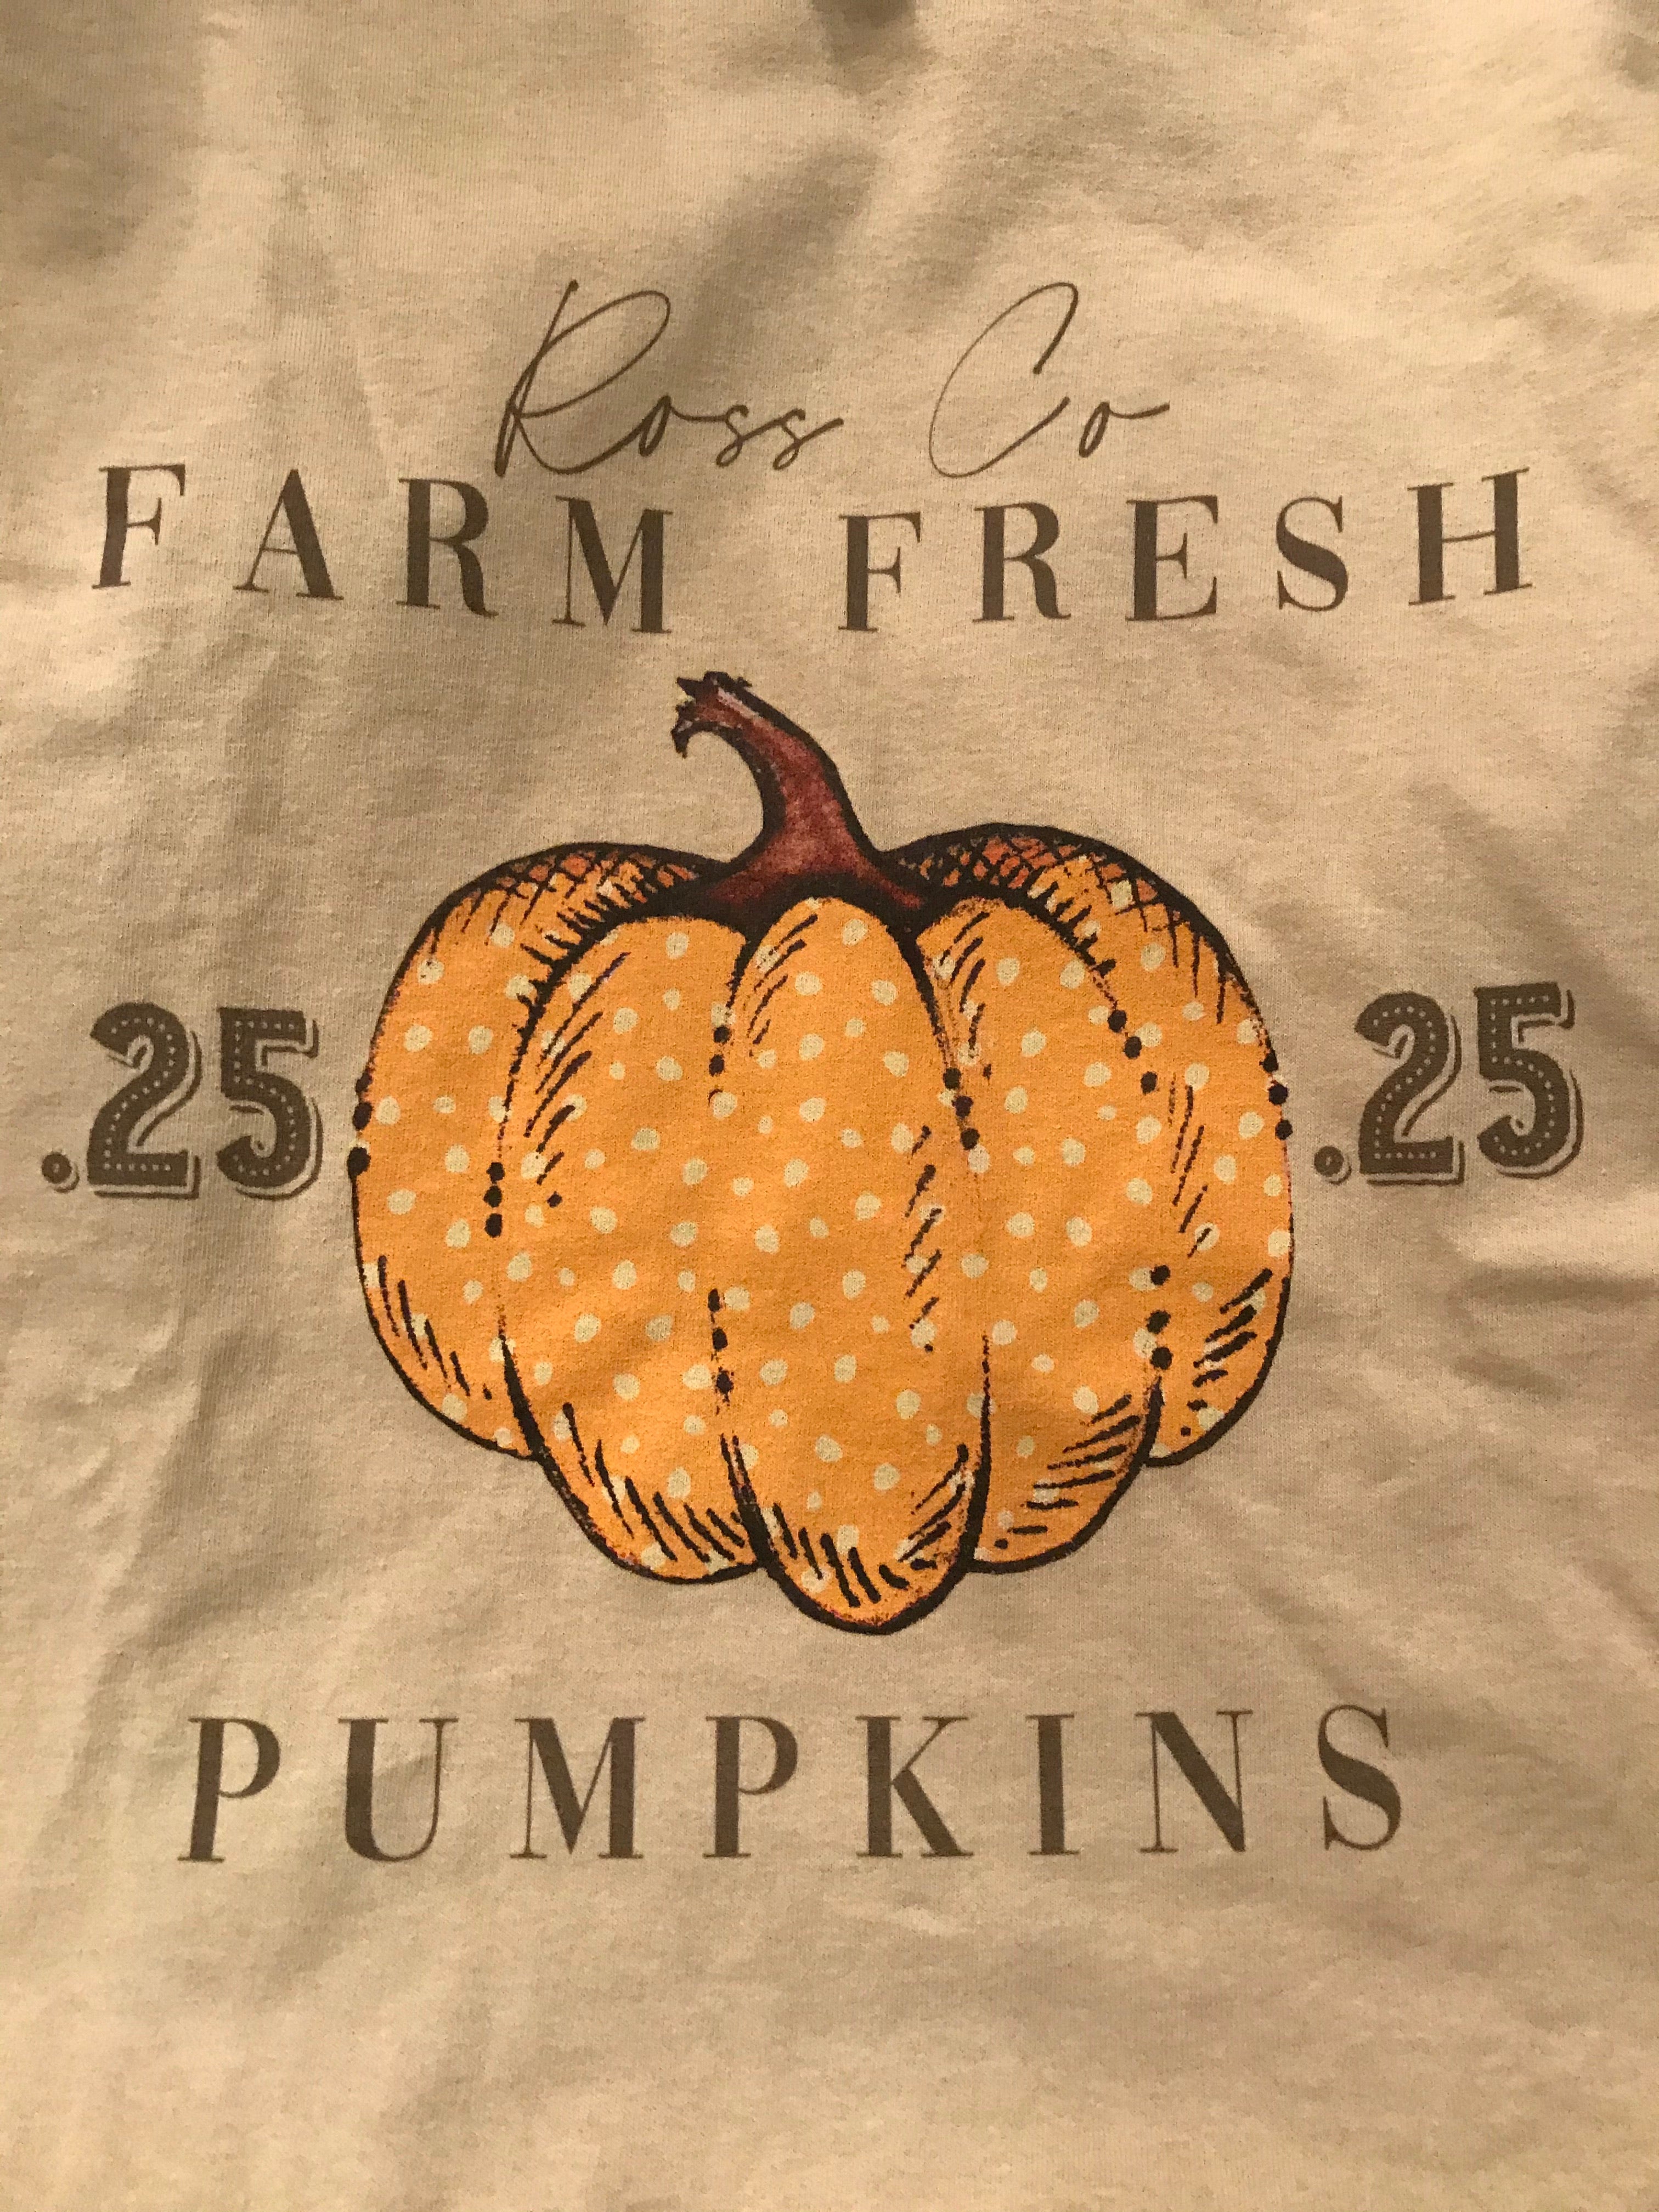 Ross Co Farm Fresh Pumpkin T-shirt